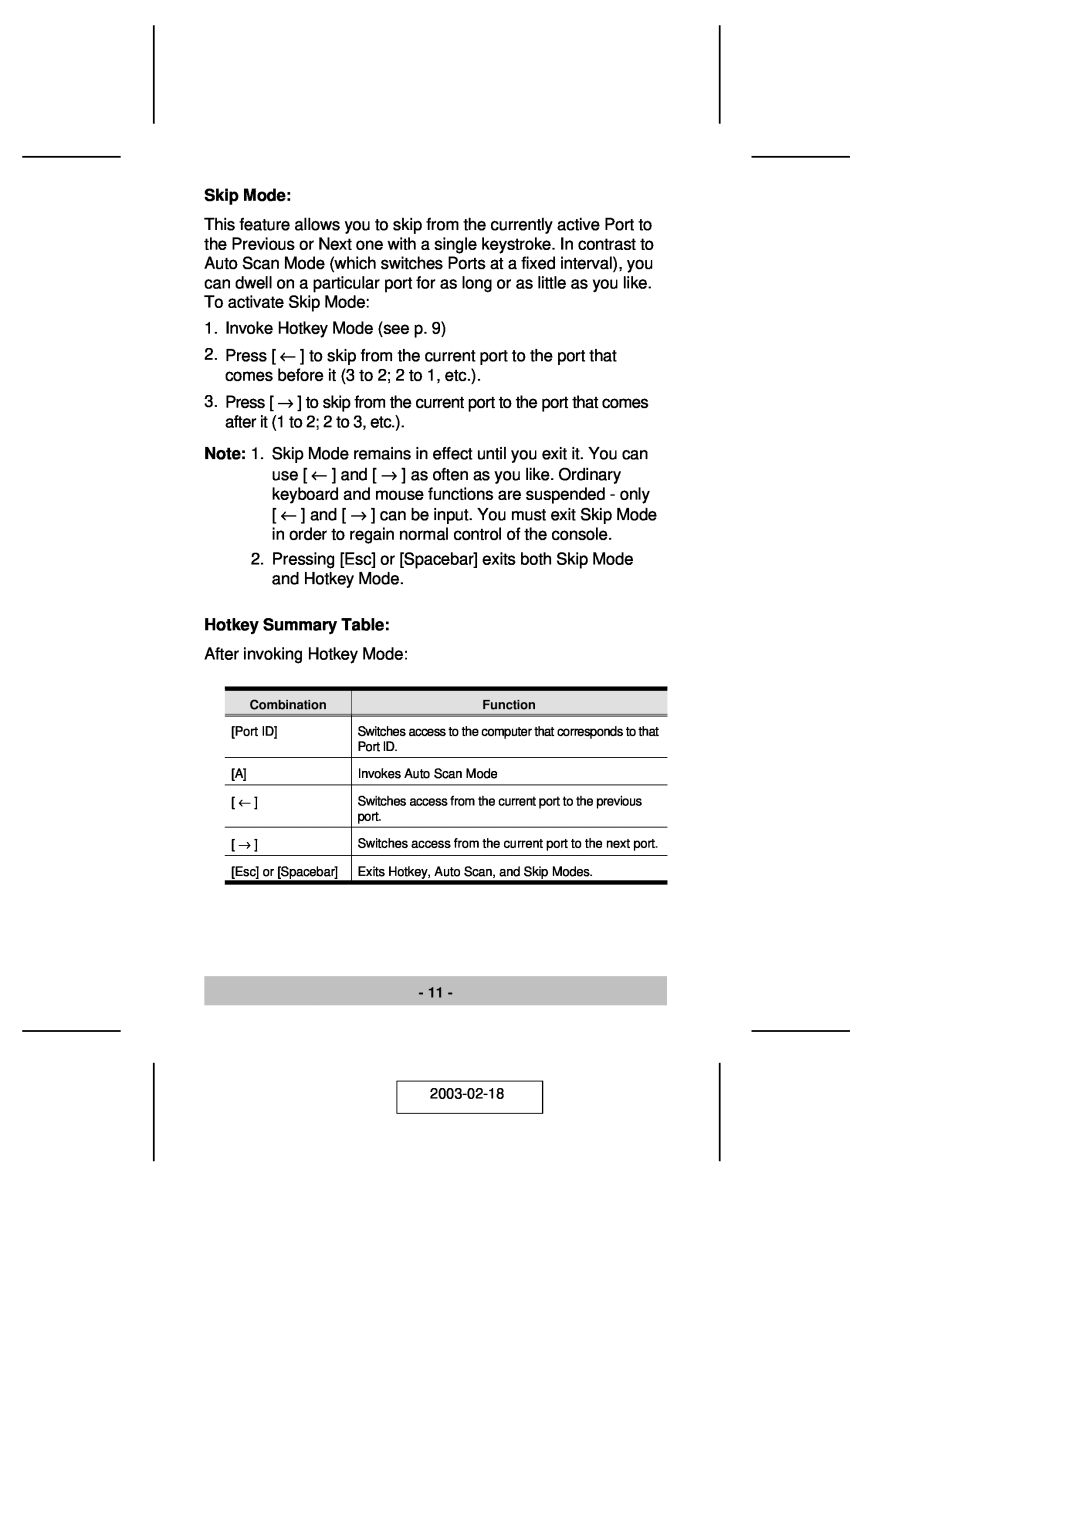 ATEN Technology CS-74A user manual Skip Mode, Hotkey Summary Table, Combination, Function 